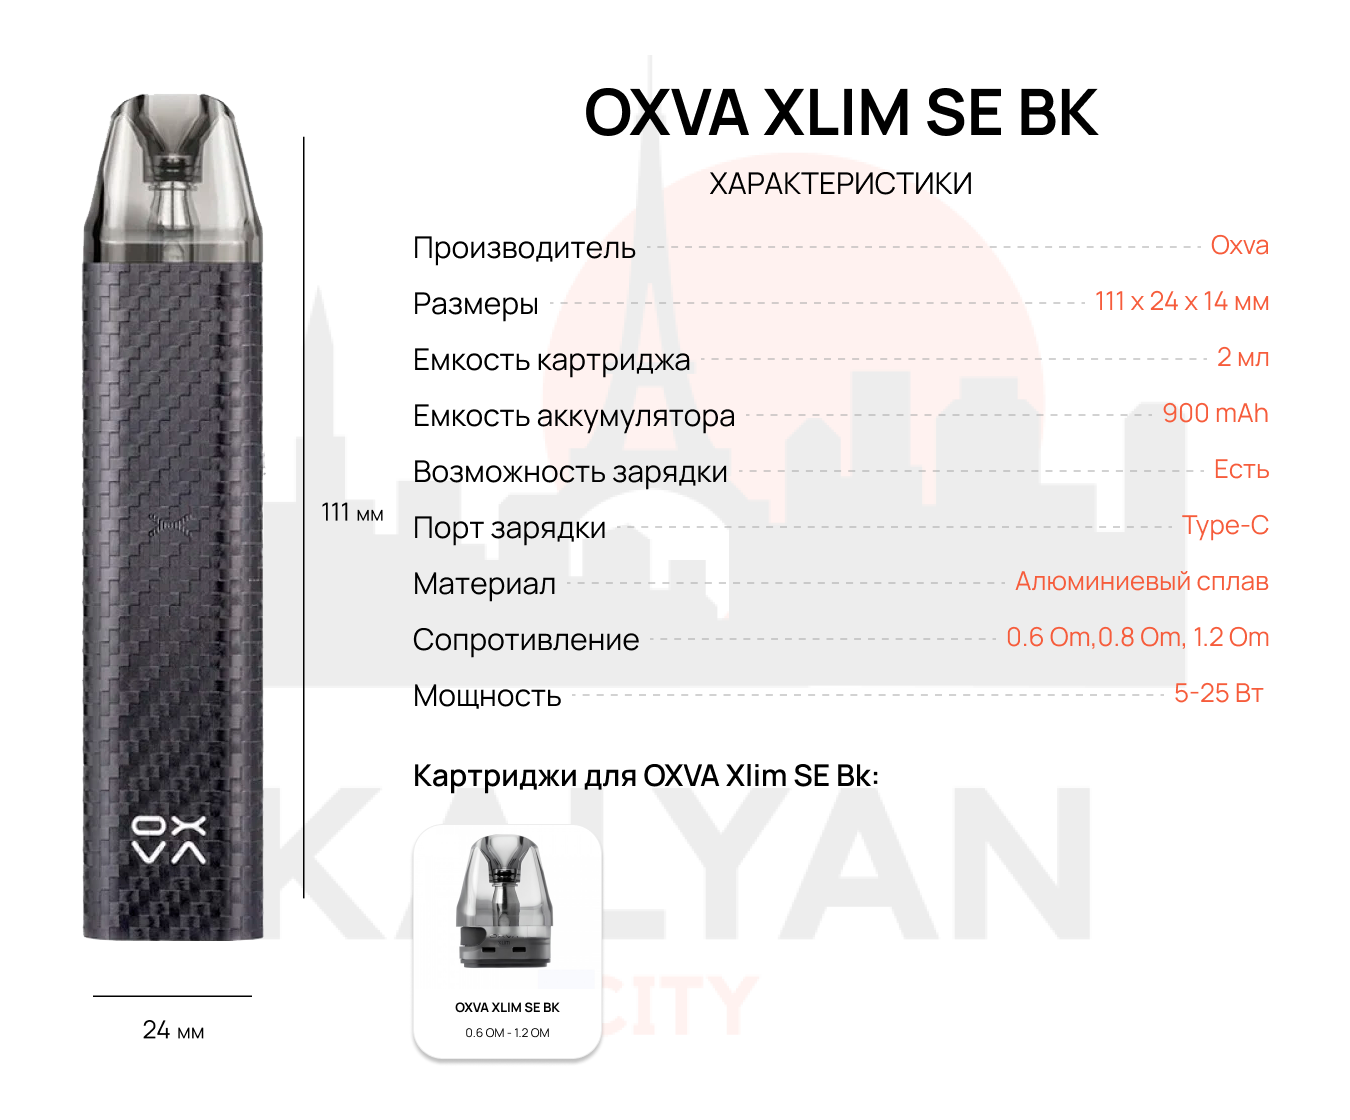 OXVA Xlim SE Bk Характеристики